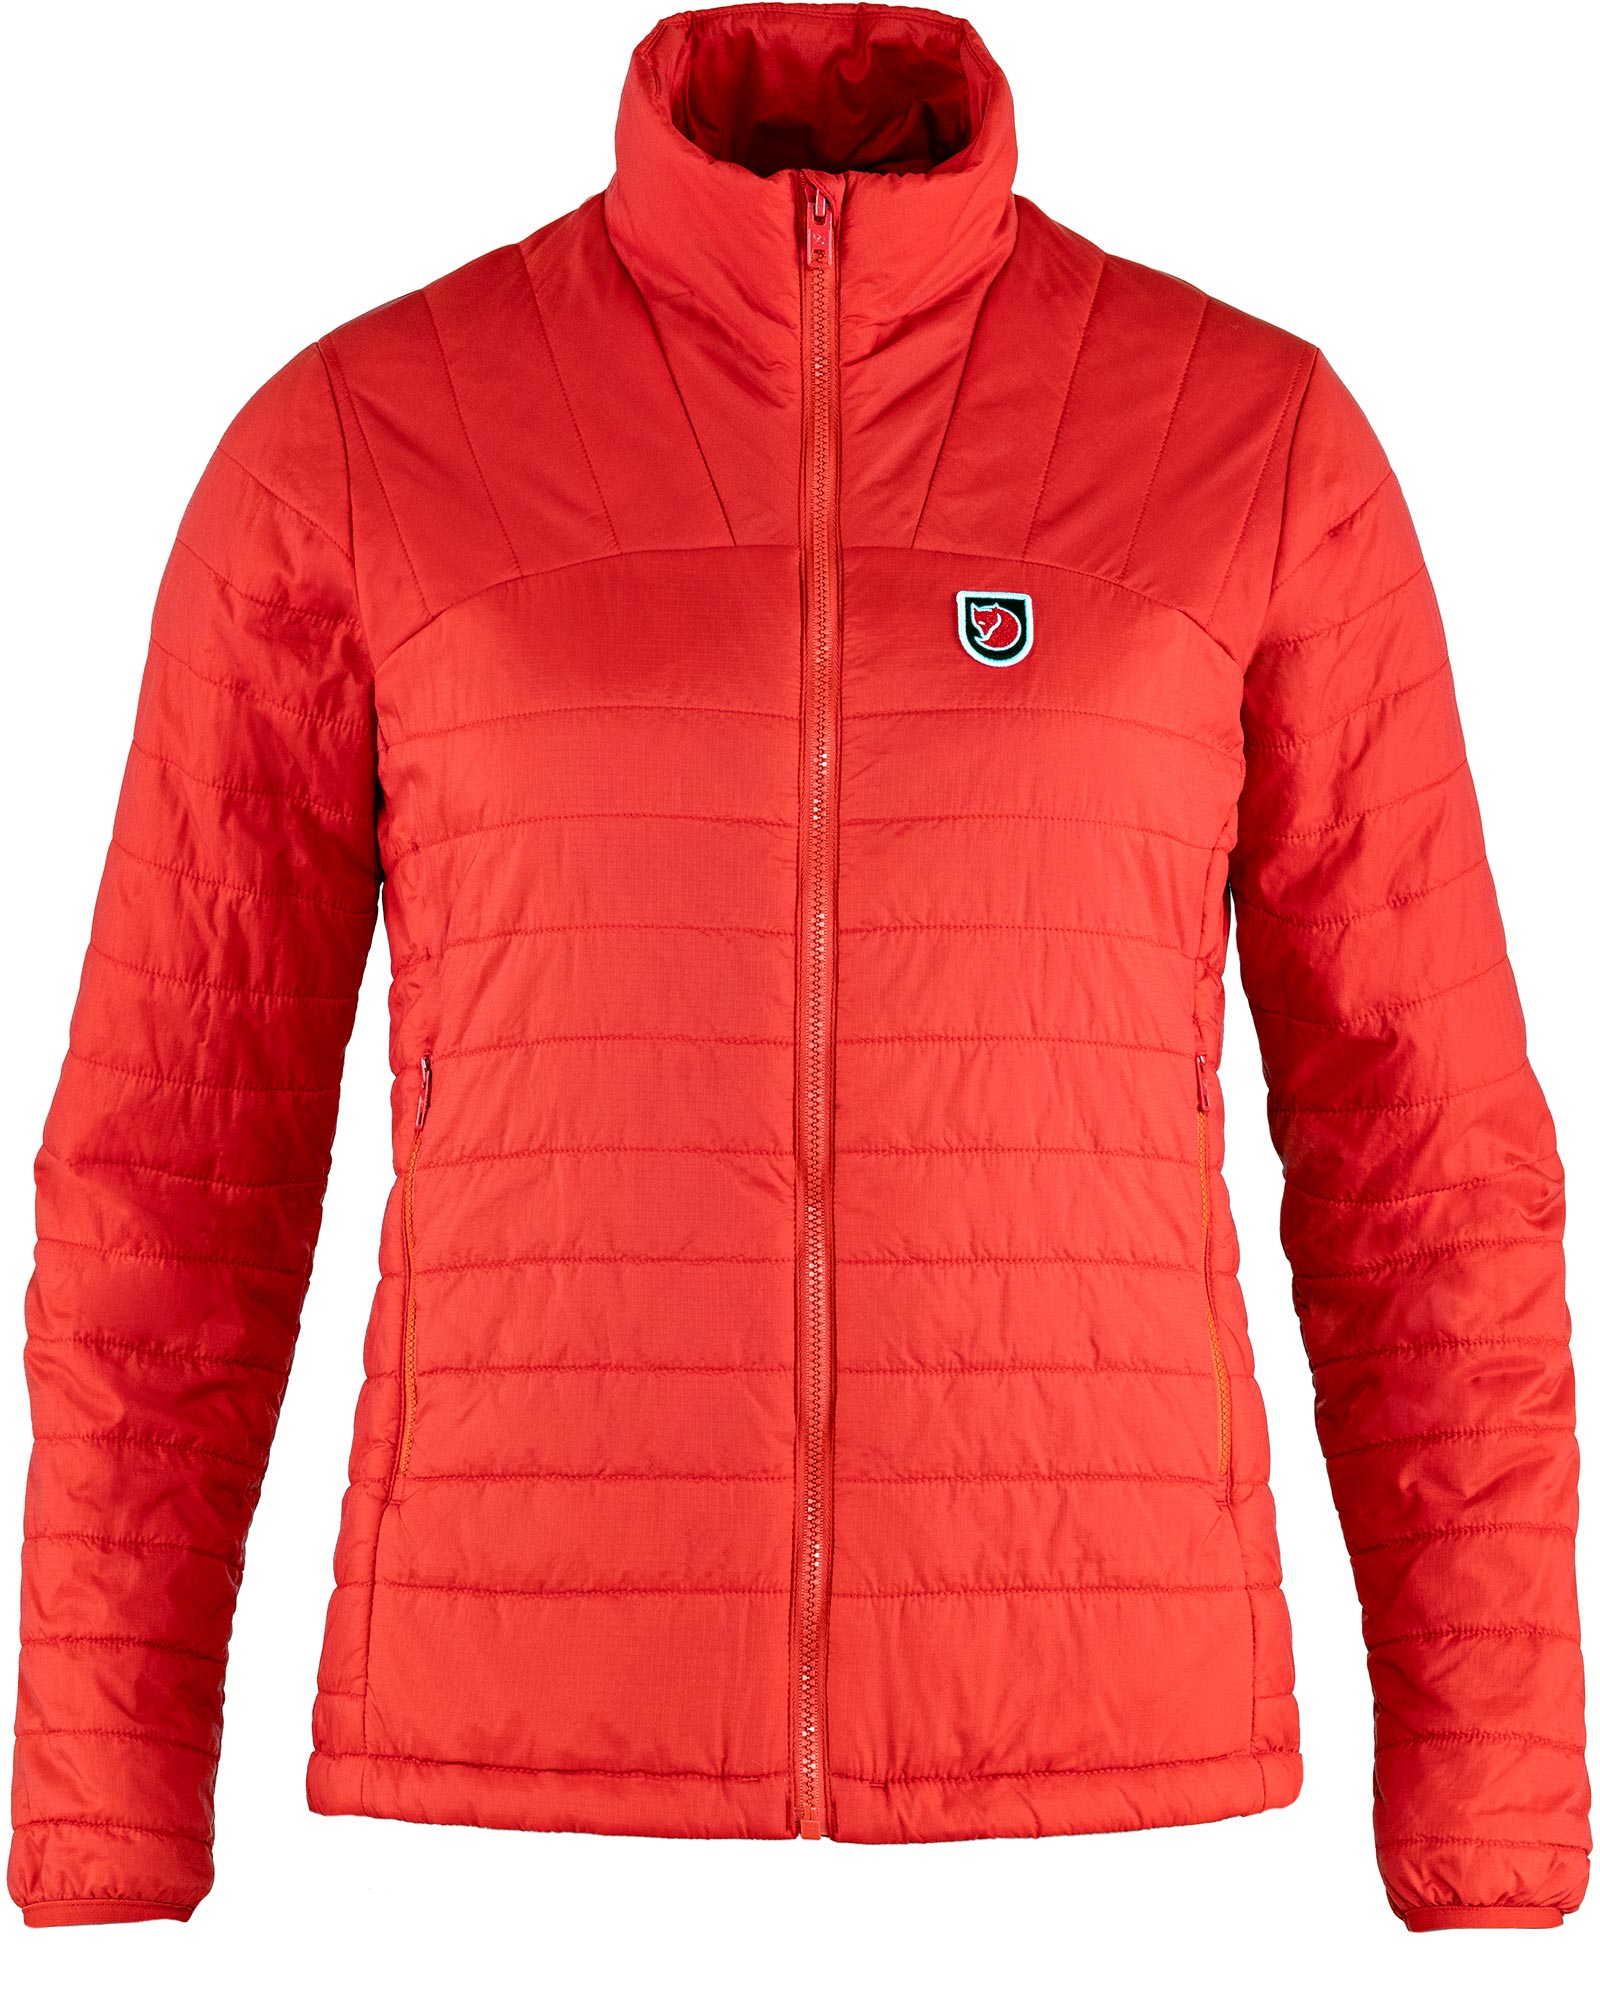 Fjallraven Expedition Latt Women’s Insulated Jacket - True Red XS